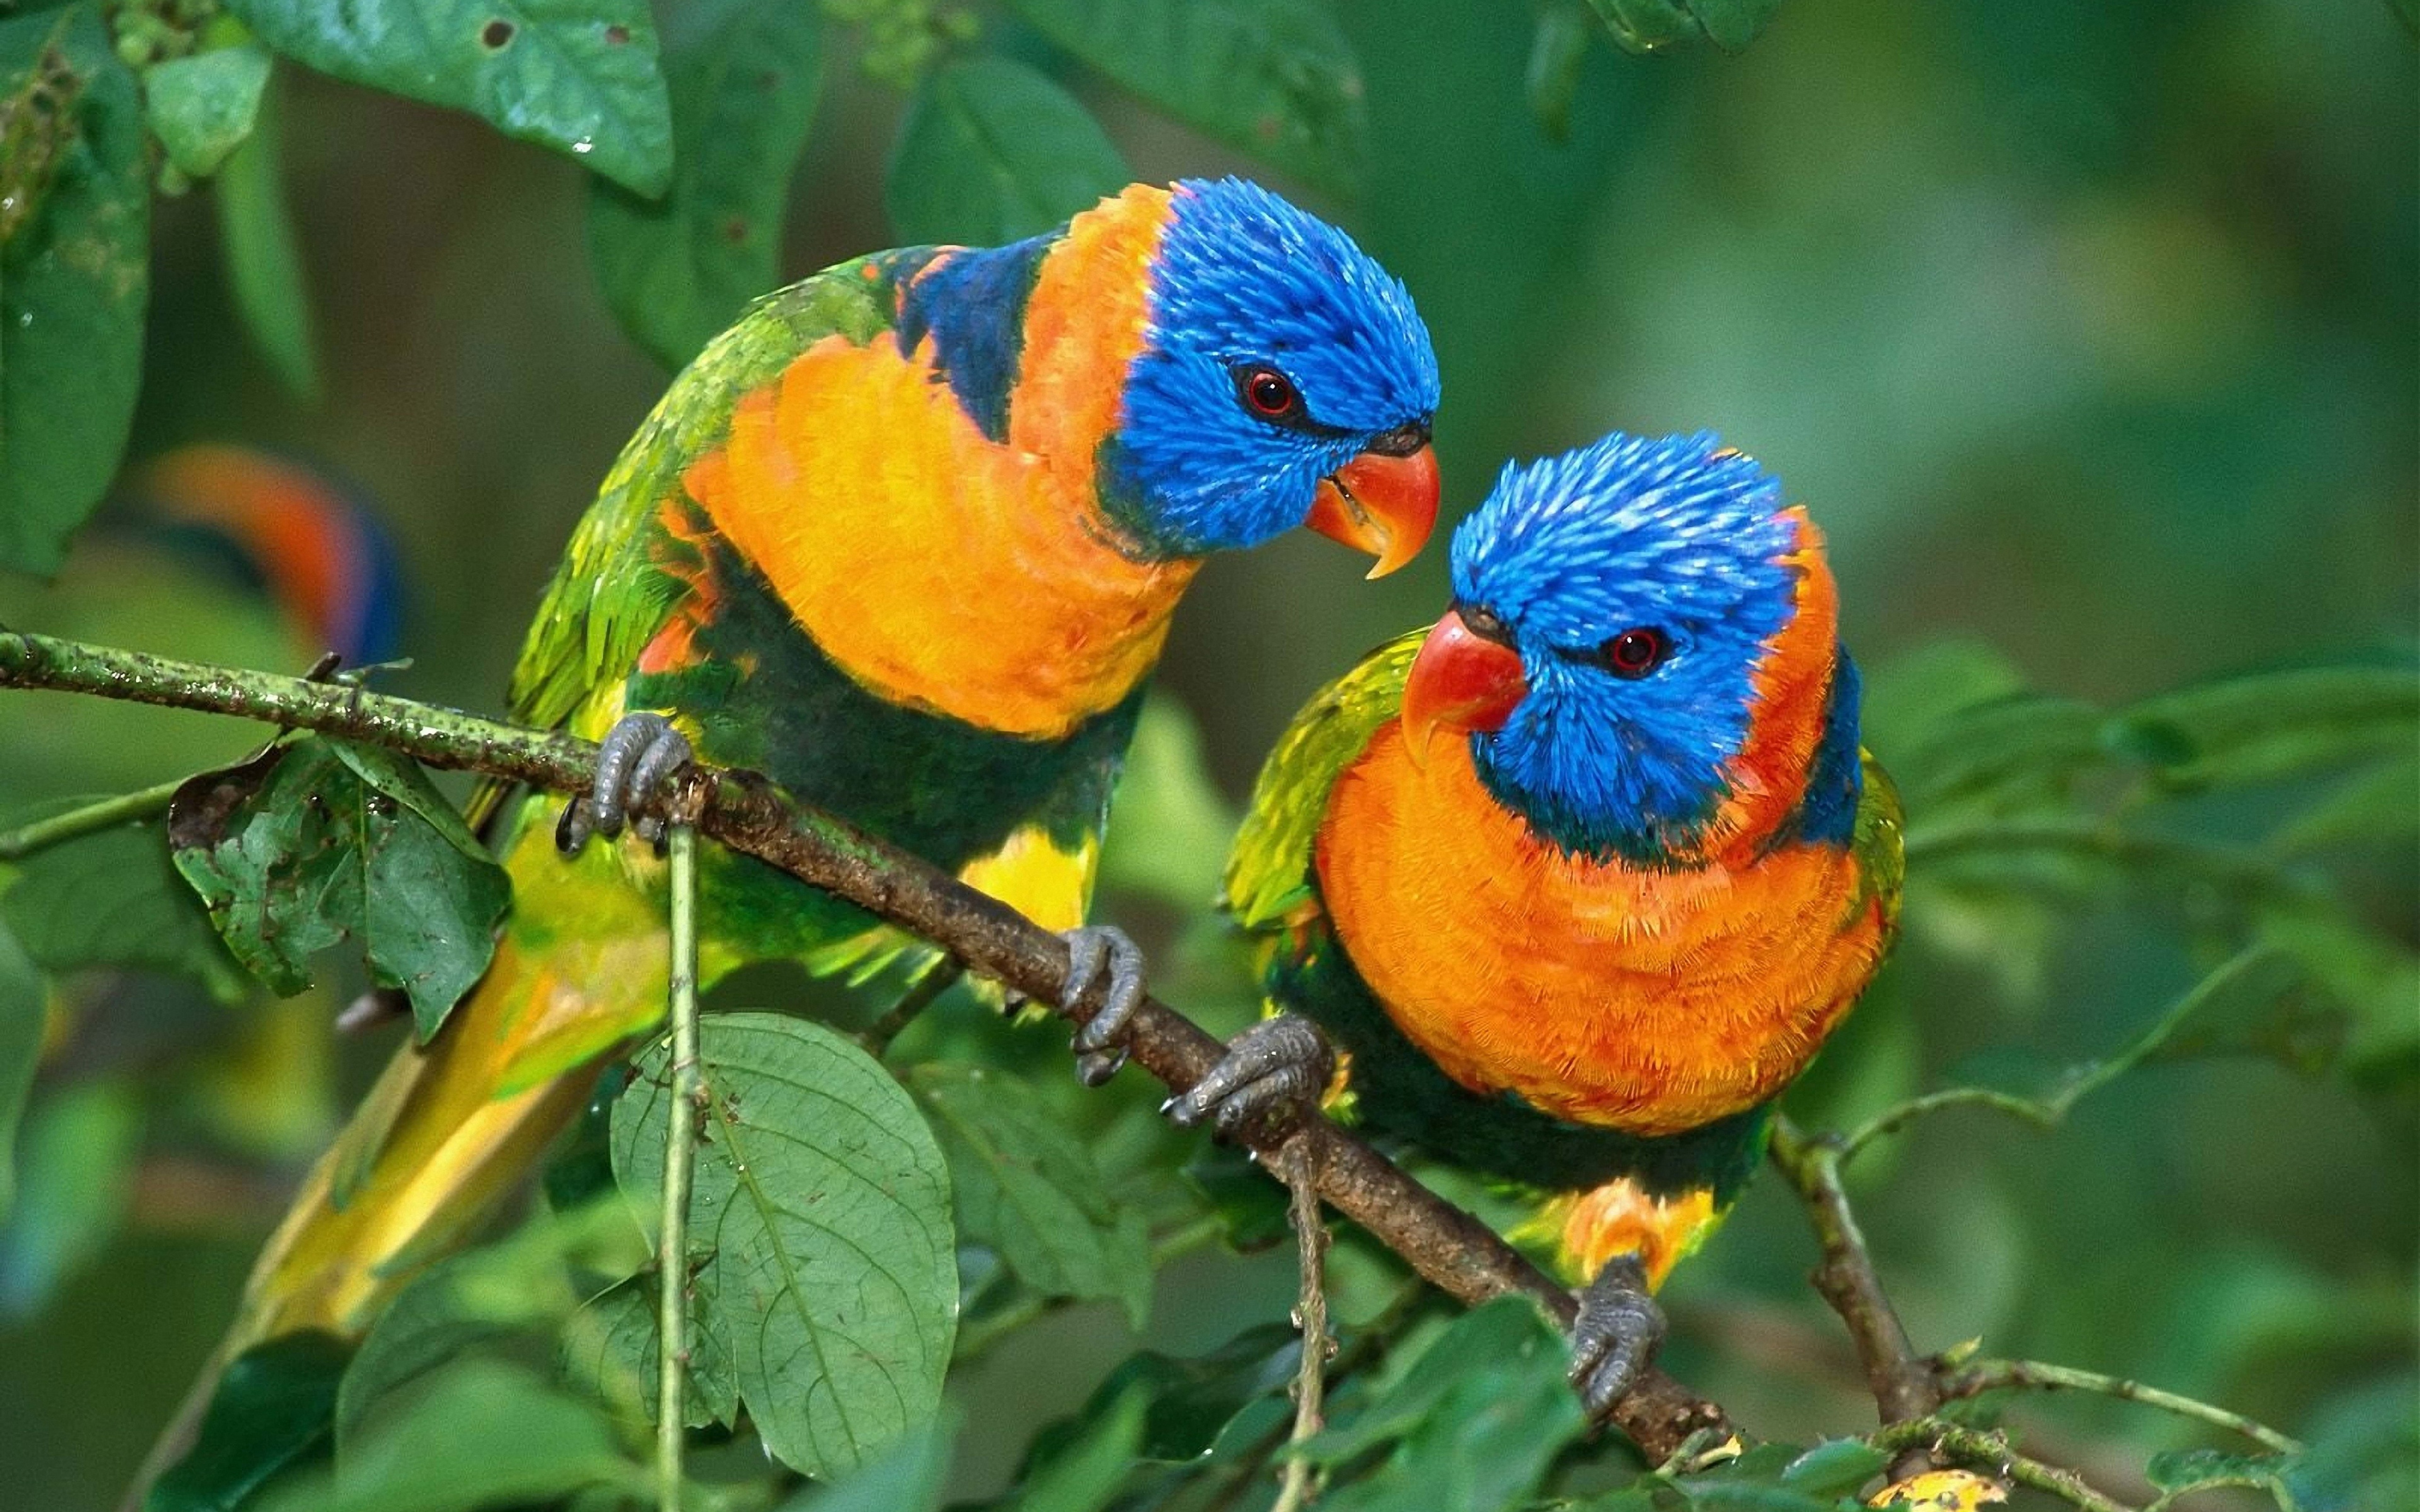 Two Colorful Parrots